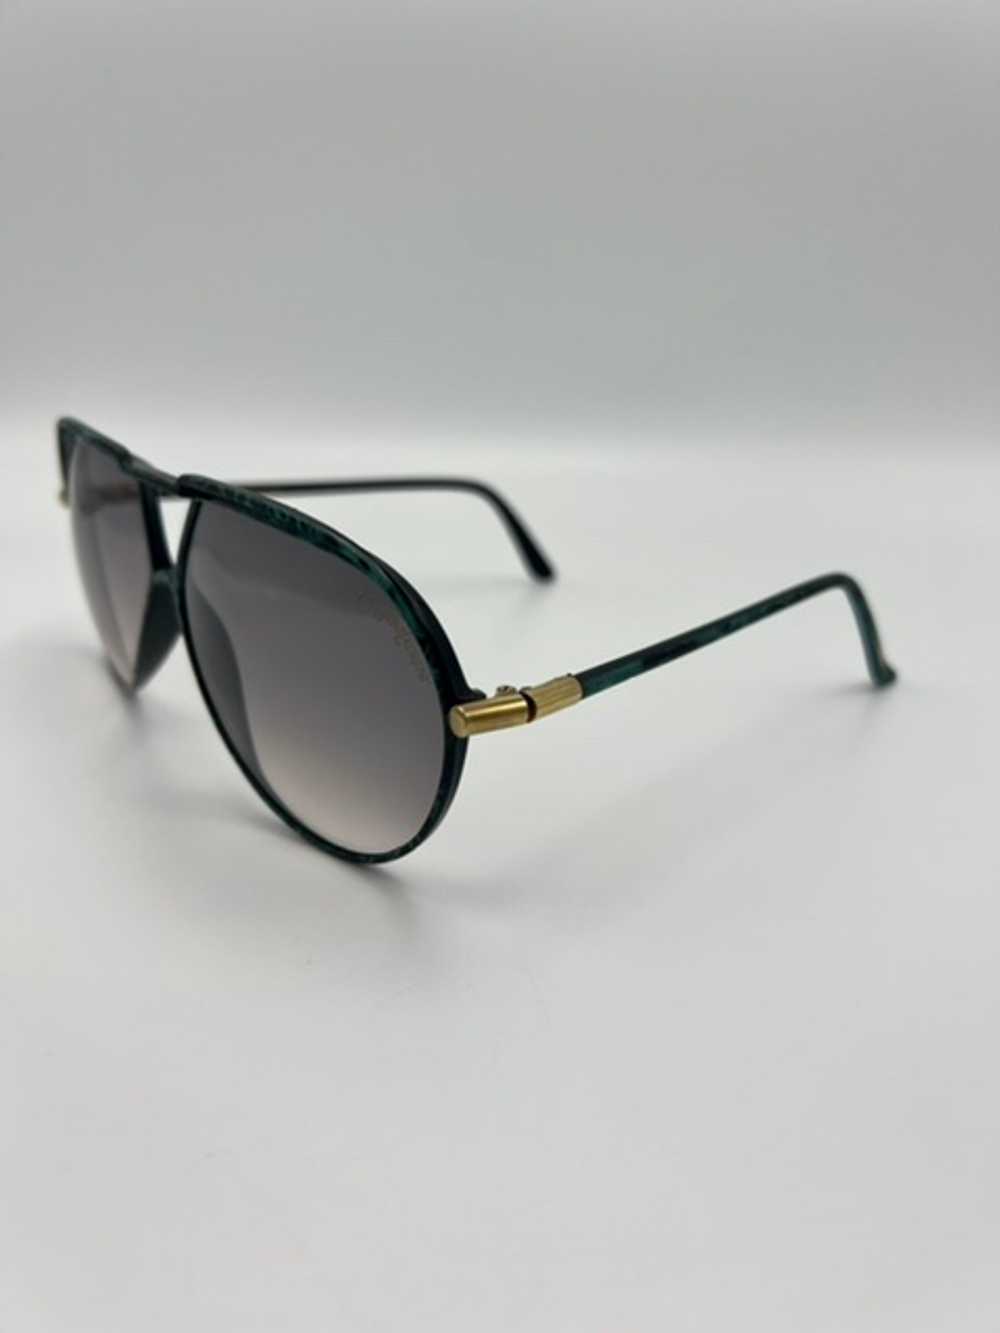 Yves Saint Laurent Coated Frame Aviator Sunglasses - image 5